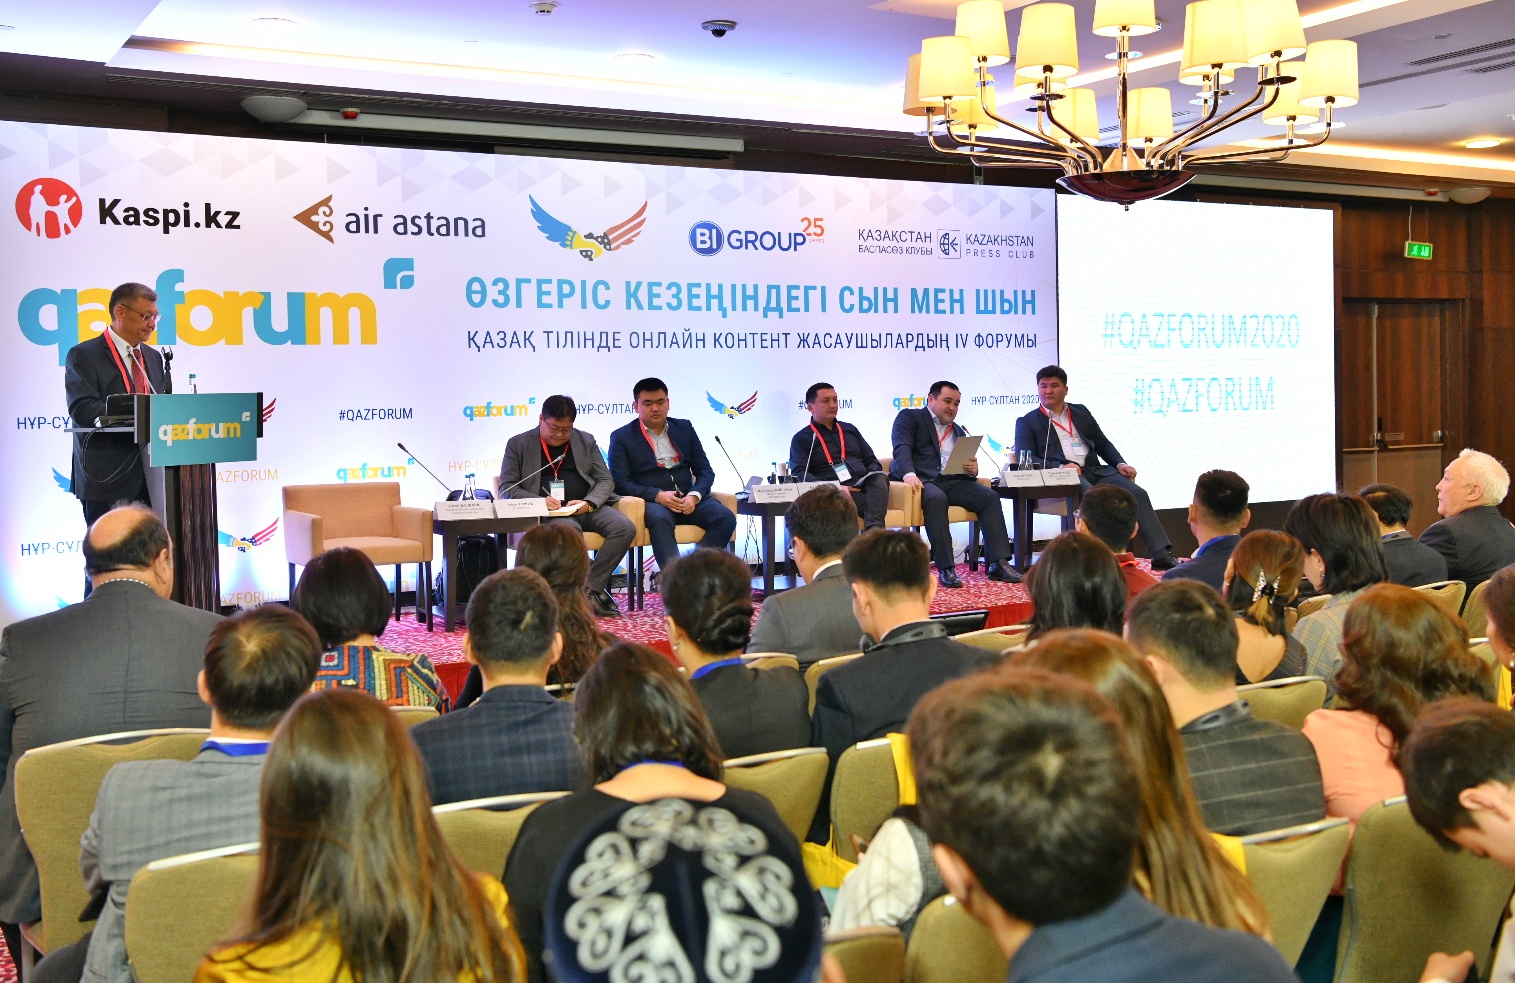 Qazforum for Kazakh-language media takes place in the capital